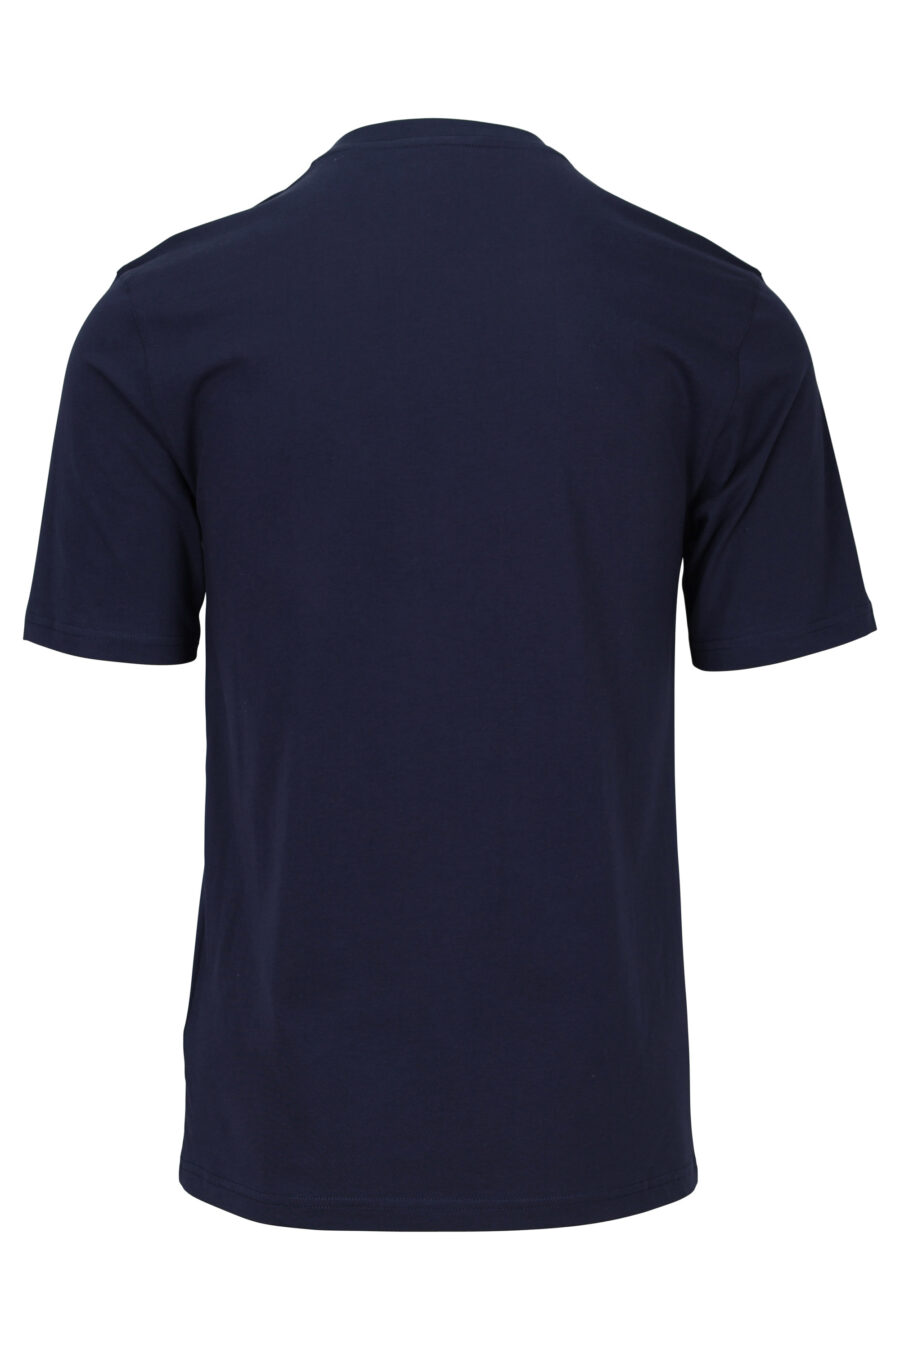 T-shirt bleu avec mini logo "teddy tailor" - 667113150833 1